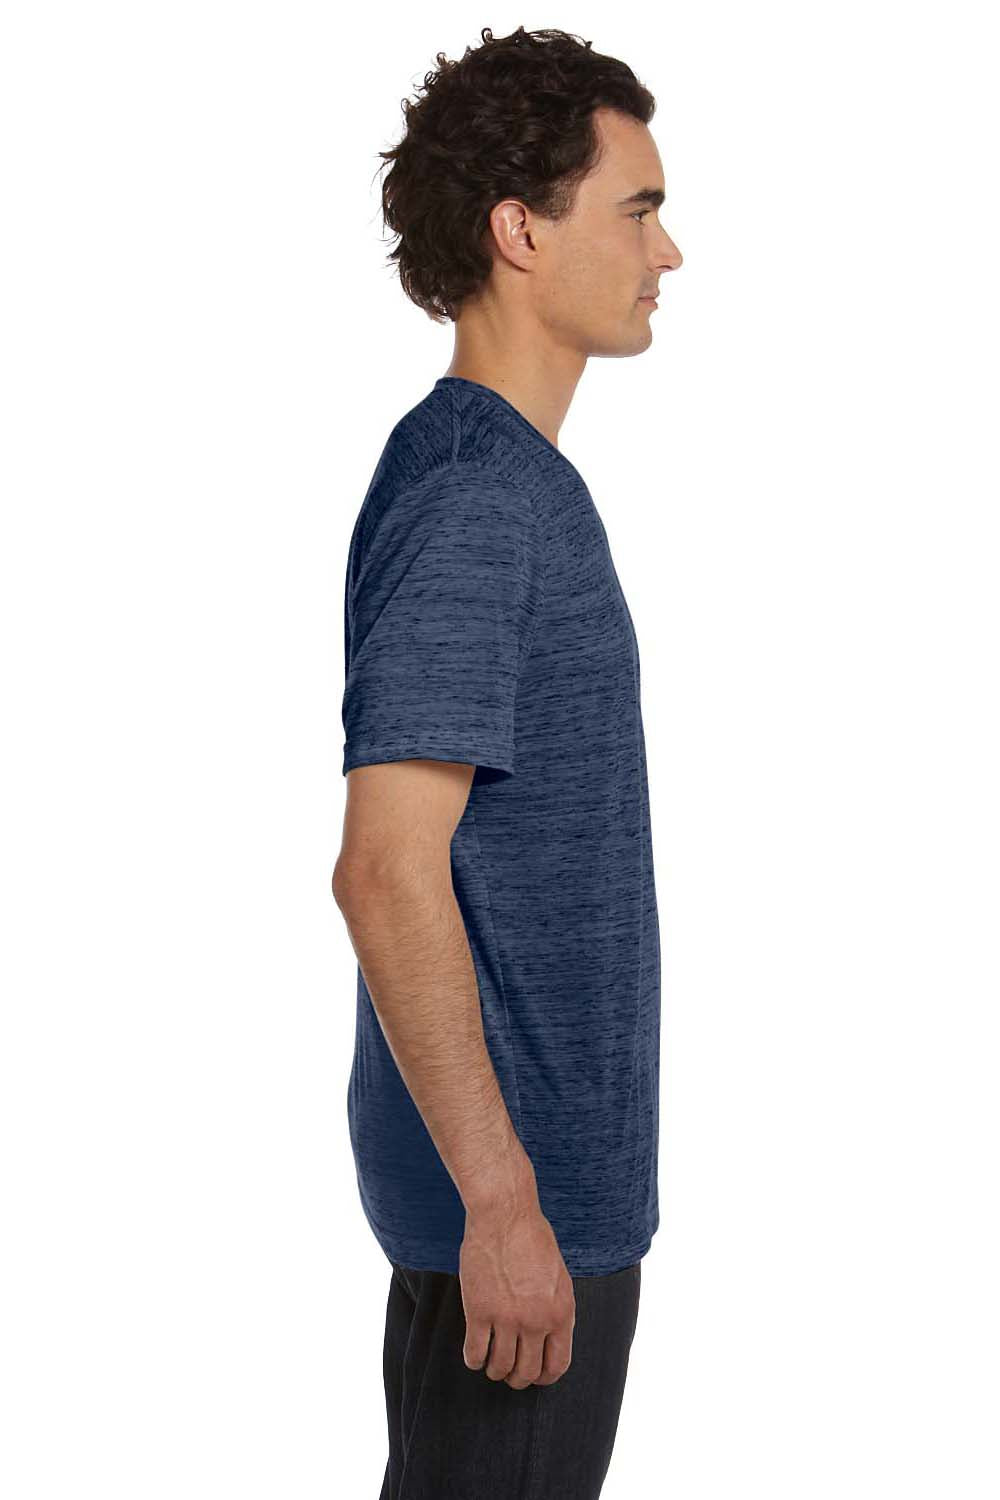 Bella + Canvas 3650 Mens Short Sleeve Crewneck T-Shirt Navy Blue Marble Side